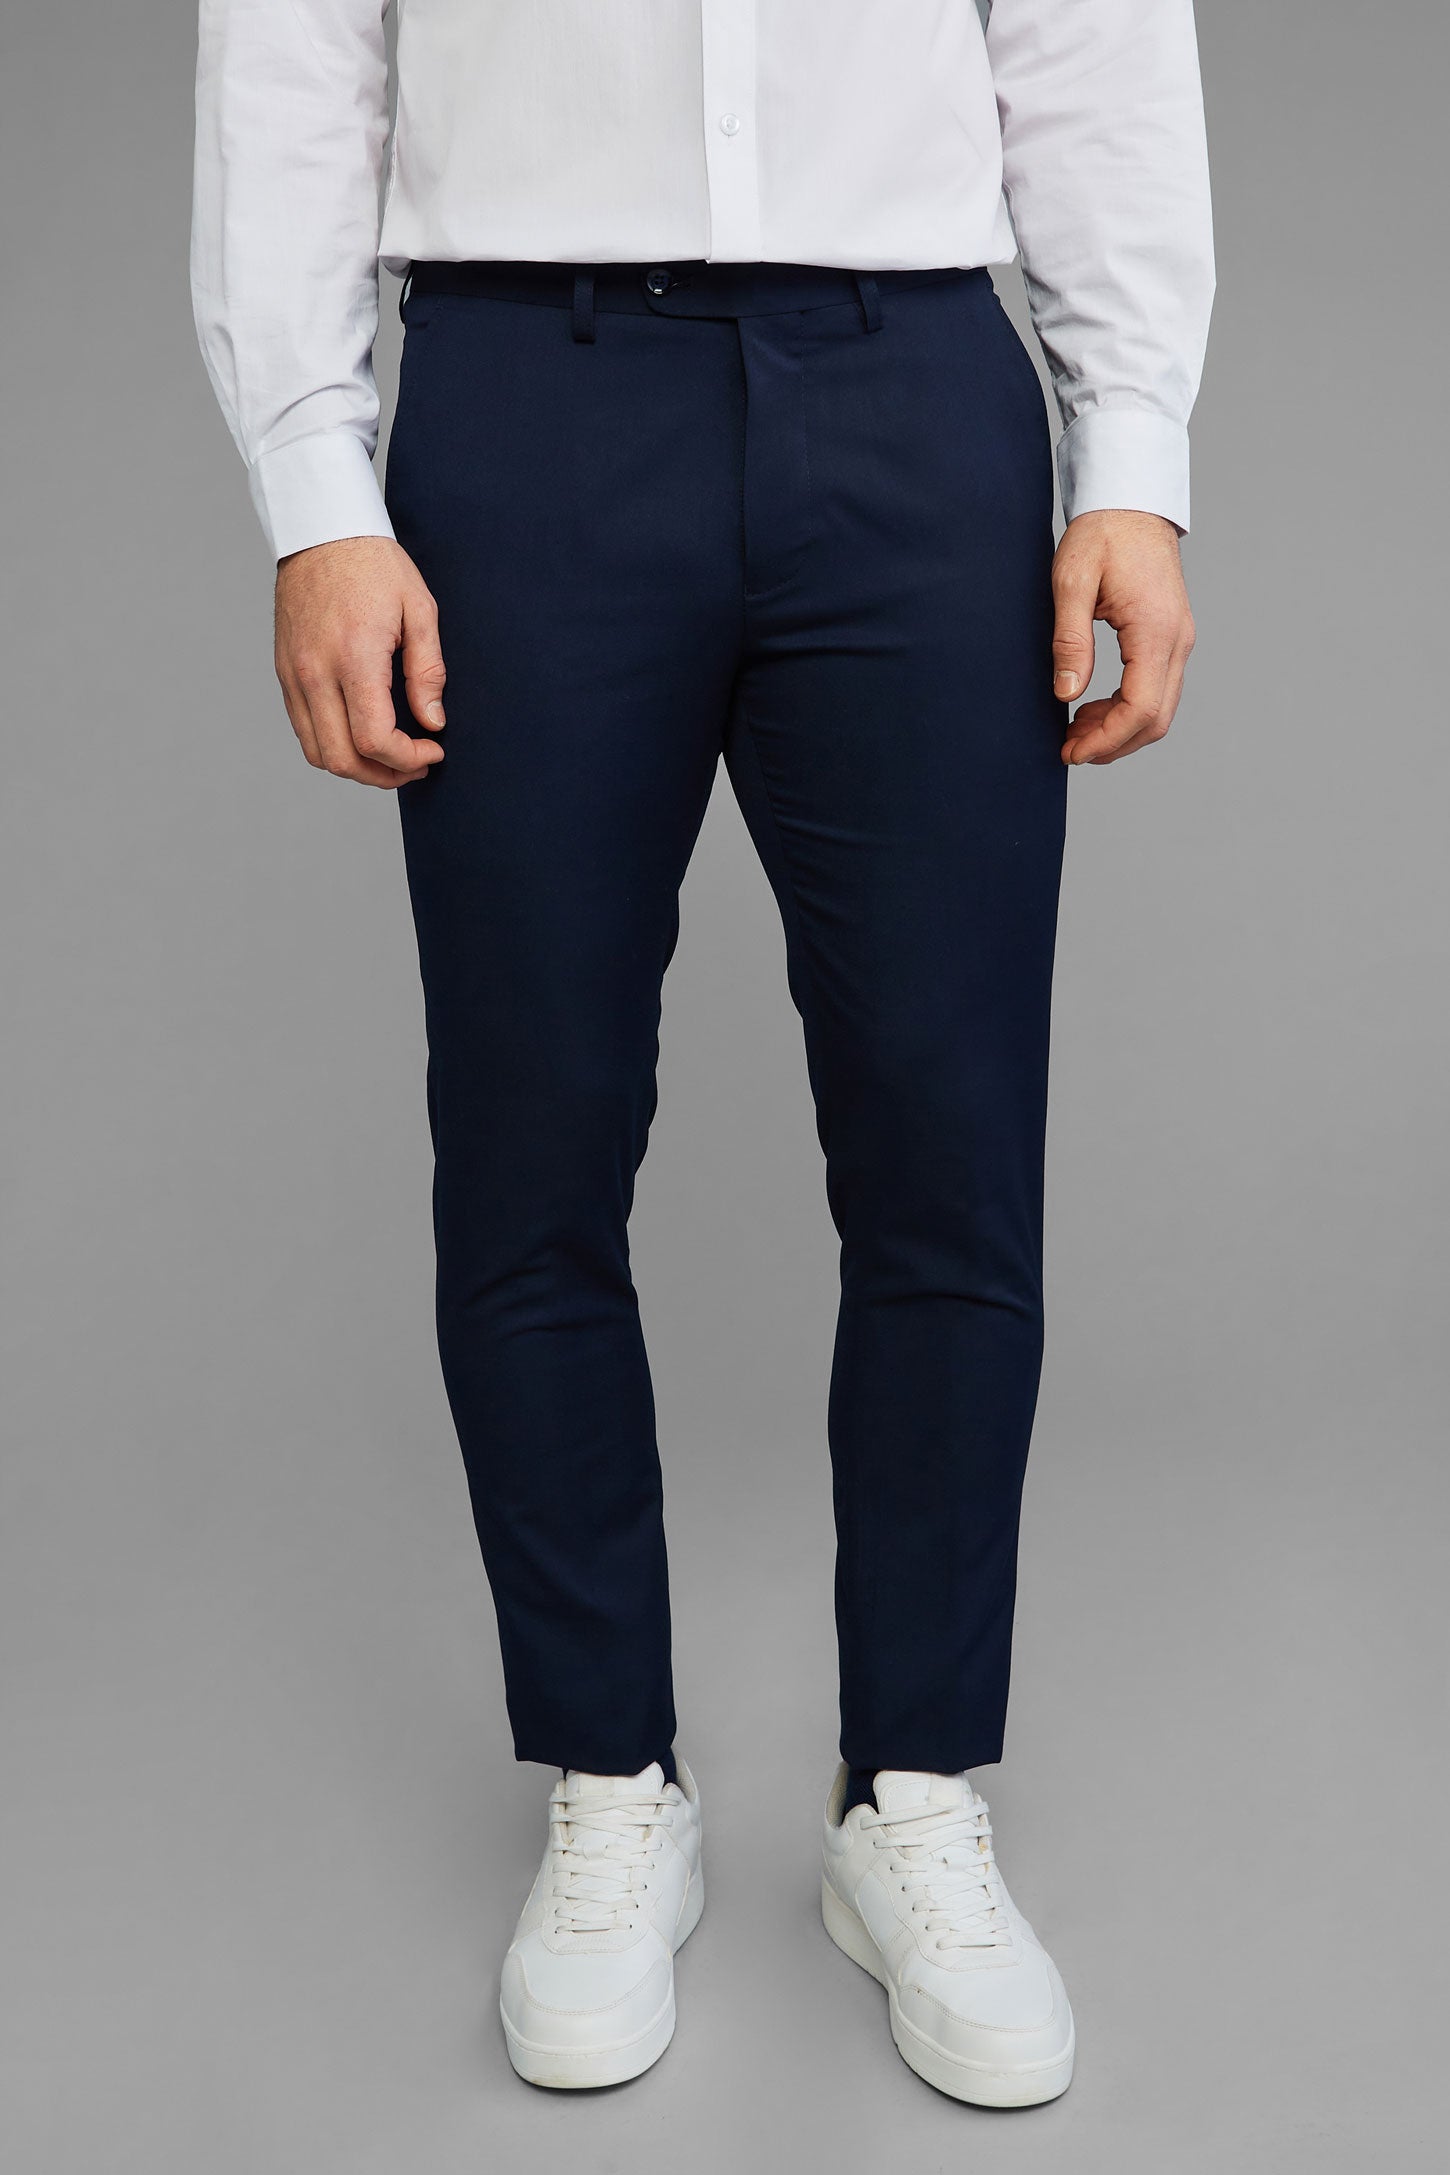 Pantalon habillé coupe moderne - Homme && MARIN